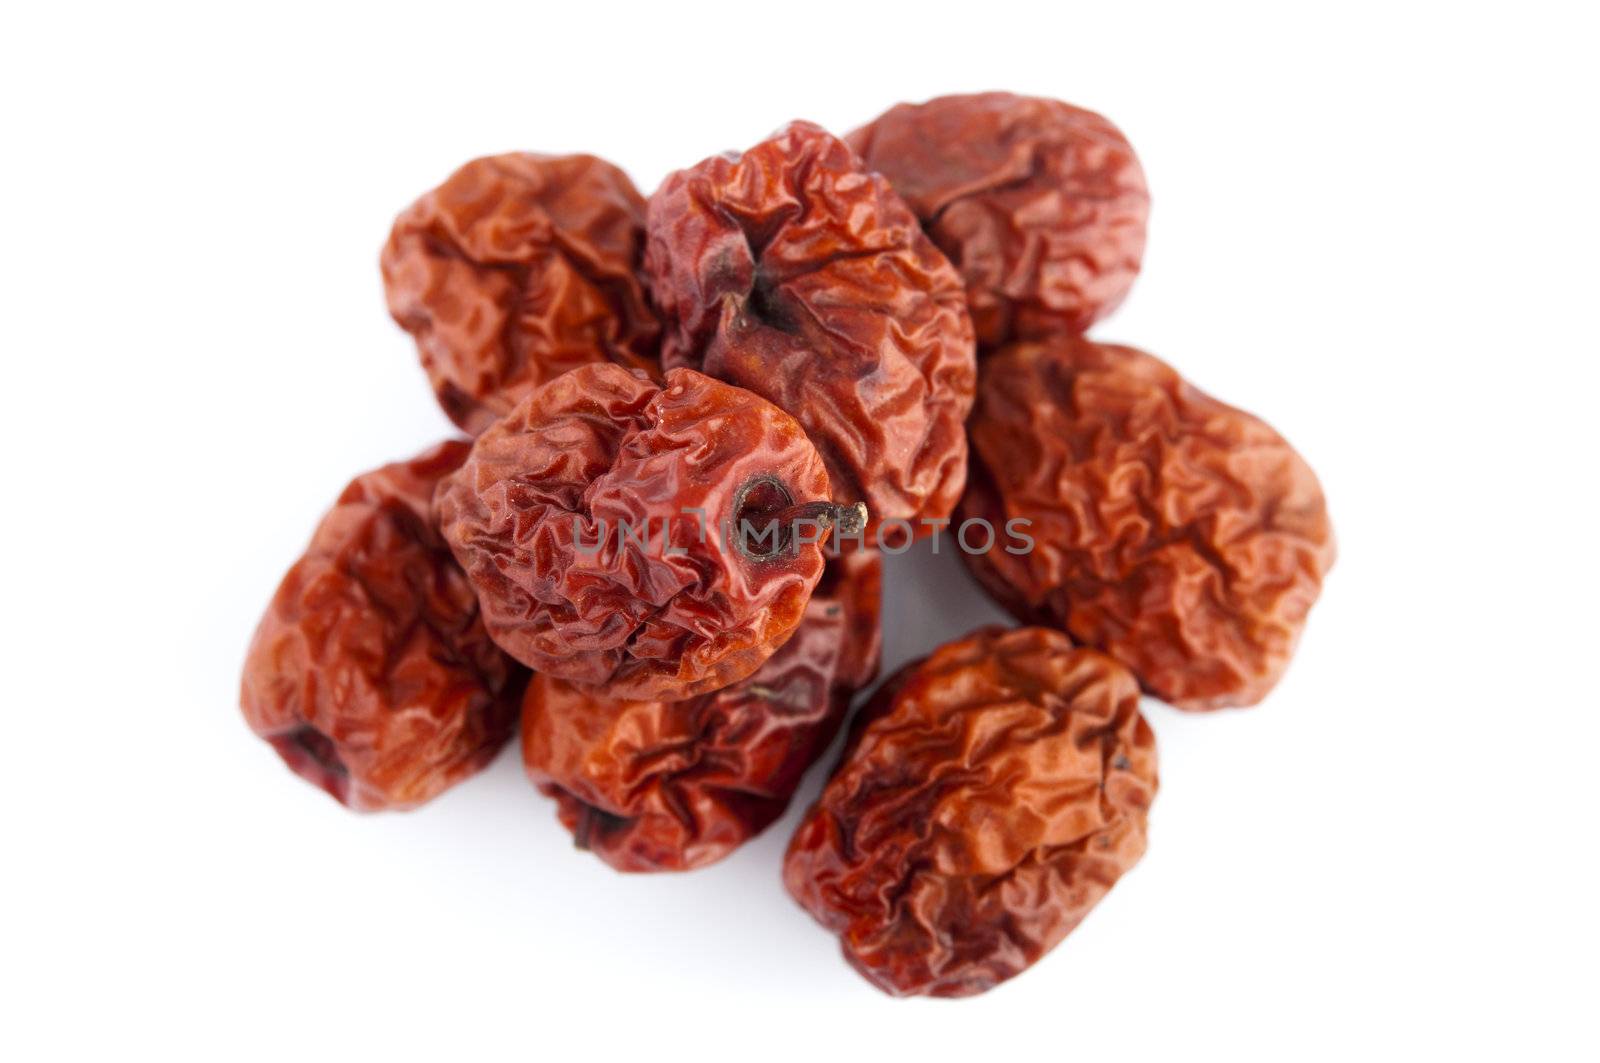 Dried jujube fruits/Chinese dates by szefei